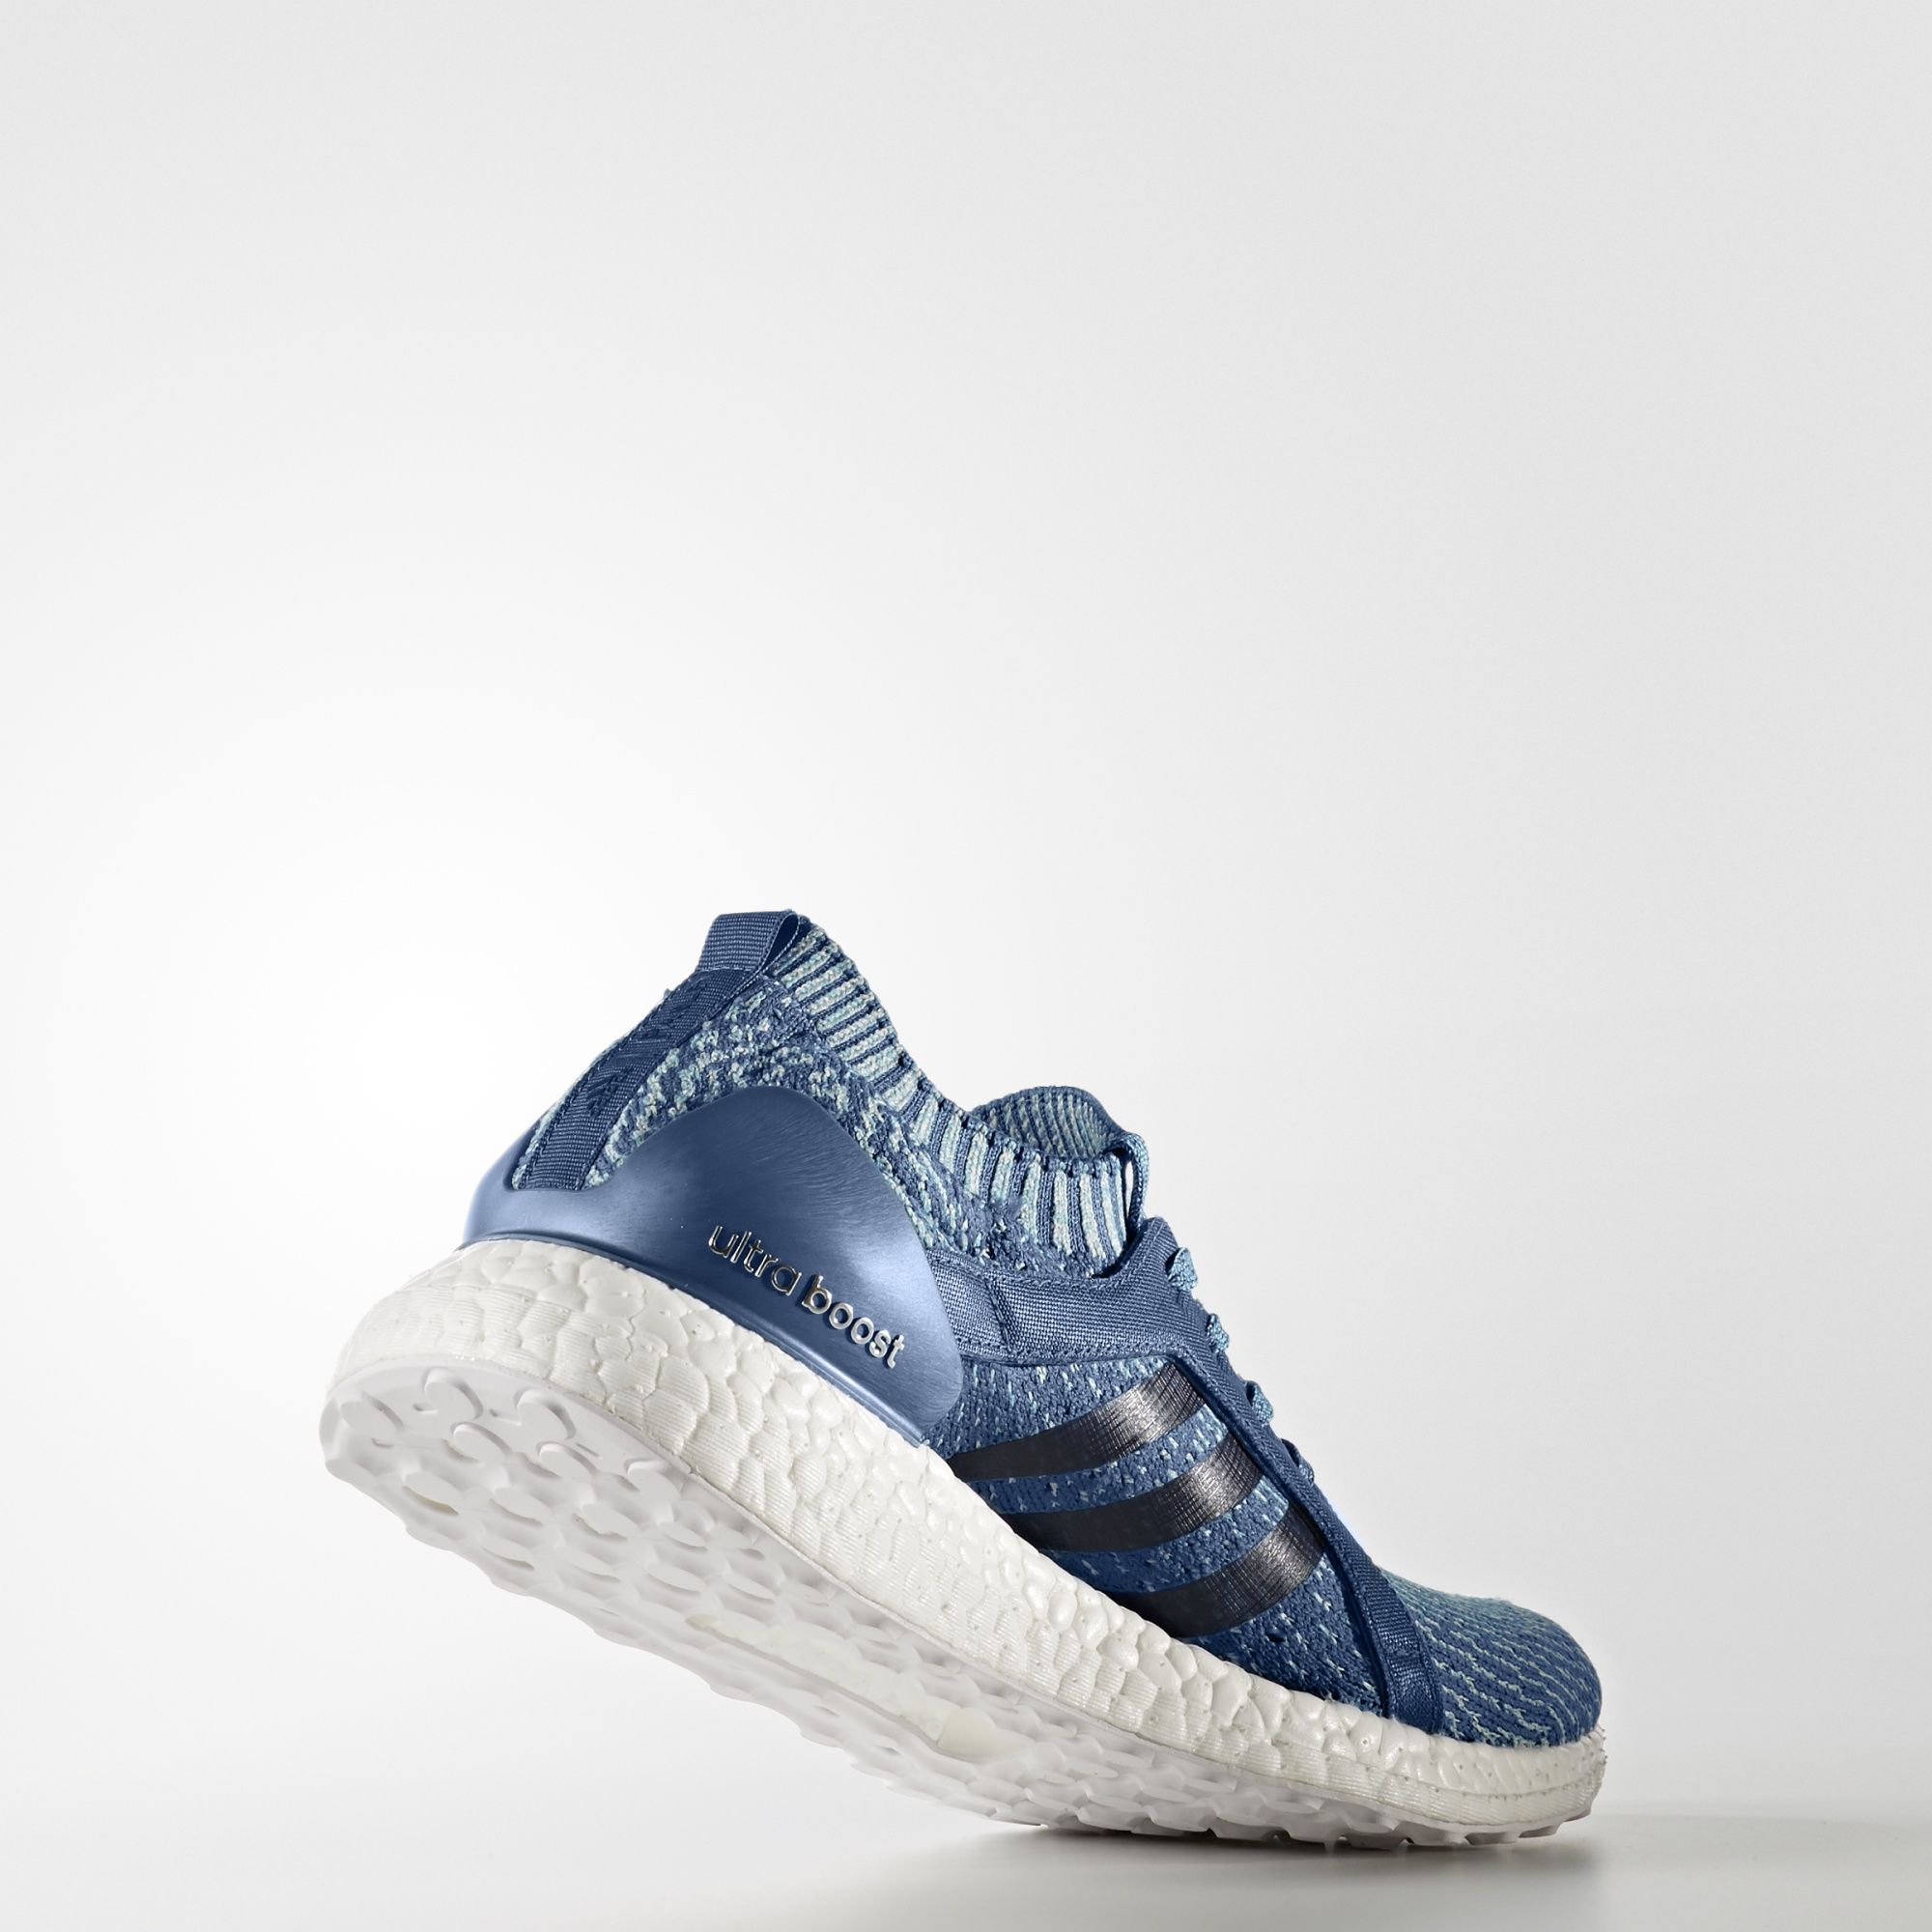 Adidas Ultra Boost X Parley
Blue / White